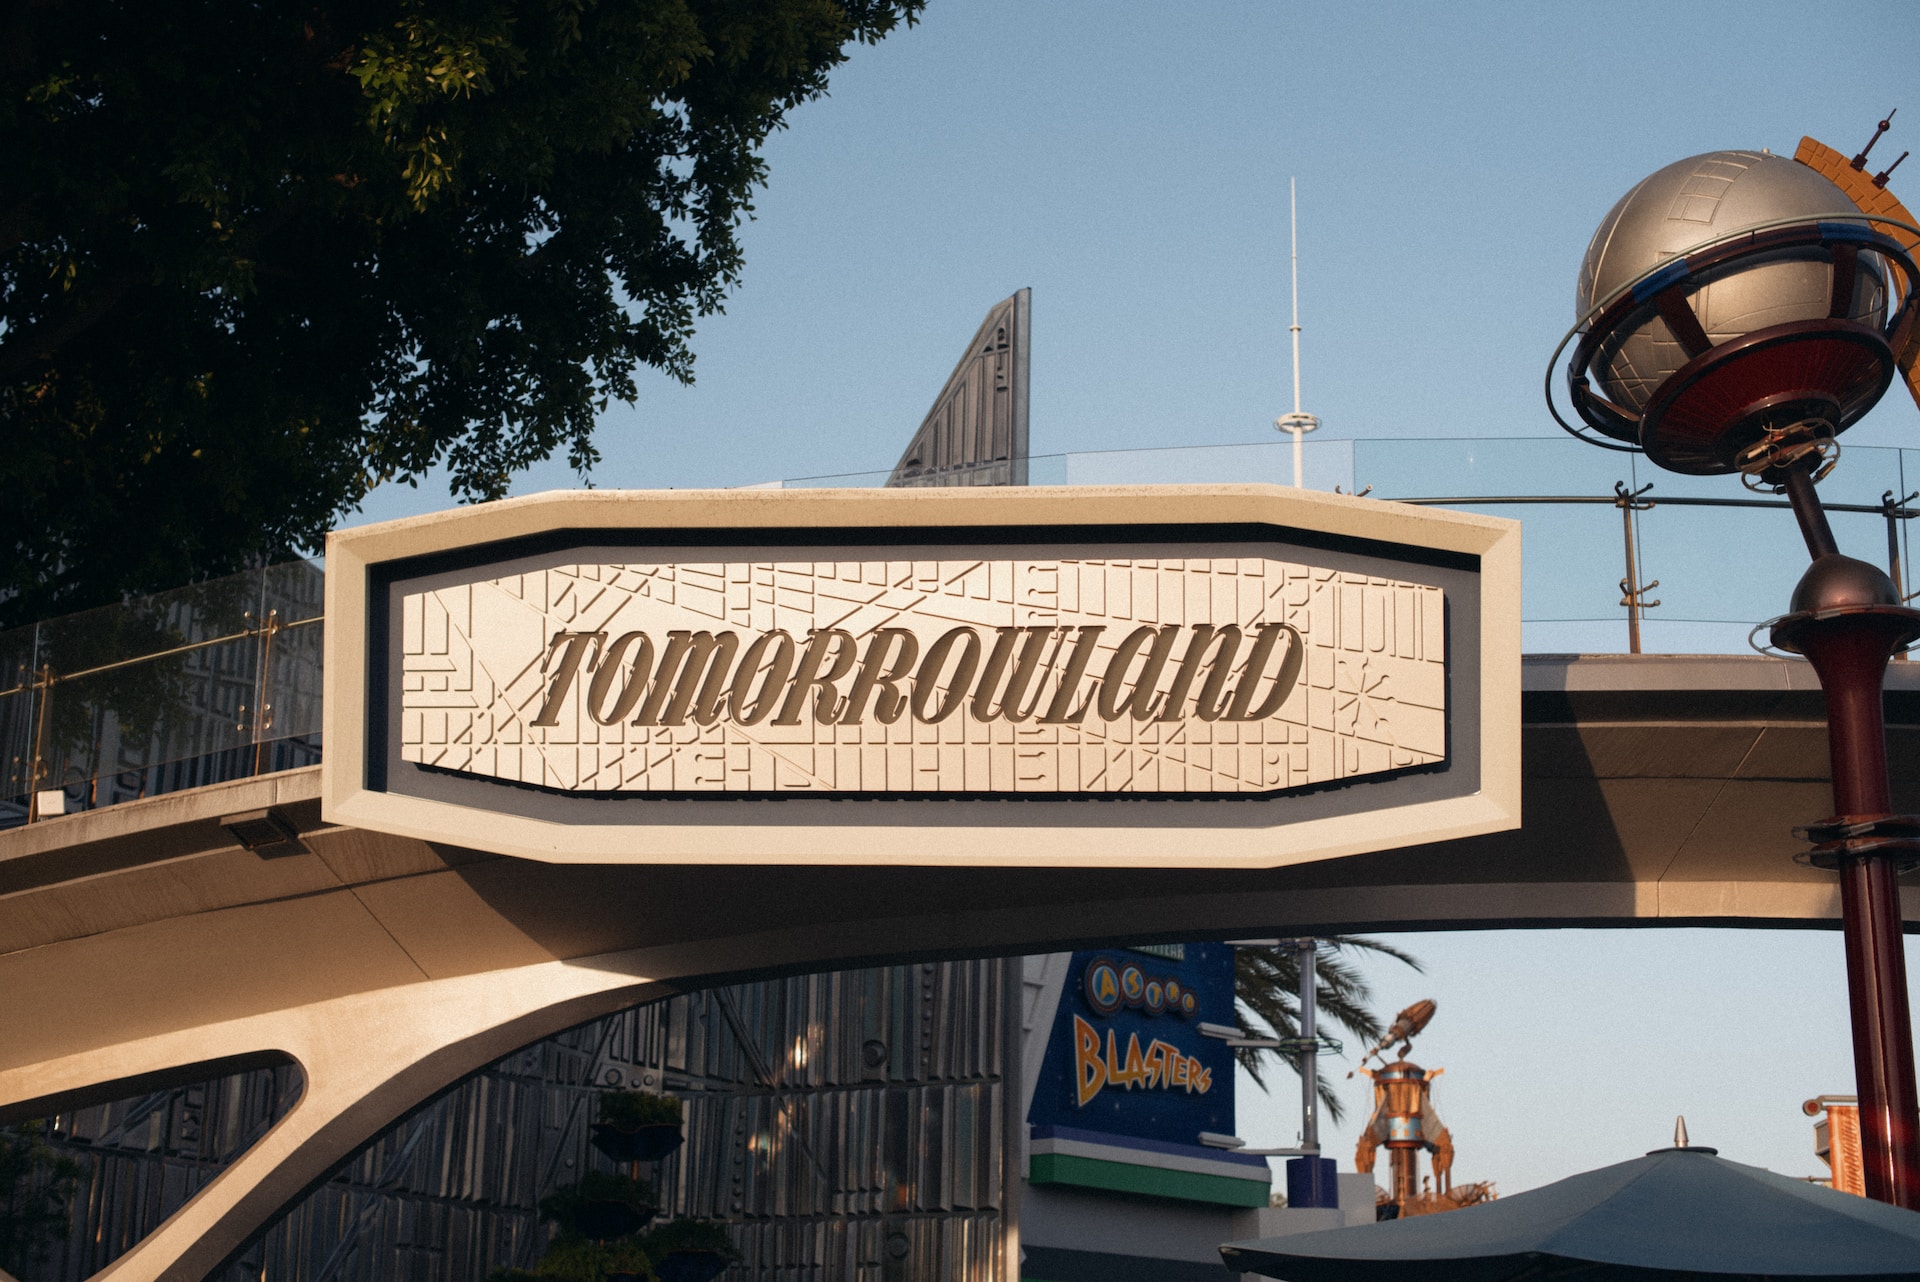 Tomorrowland Futuristic Thrills Await!